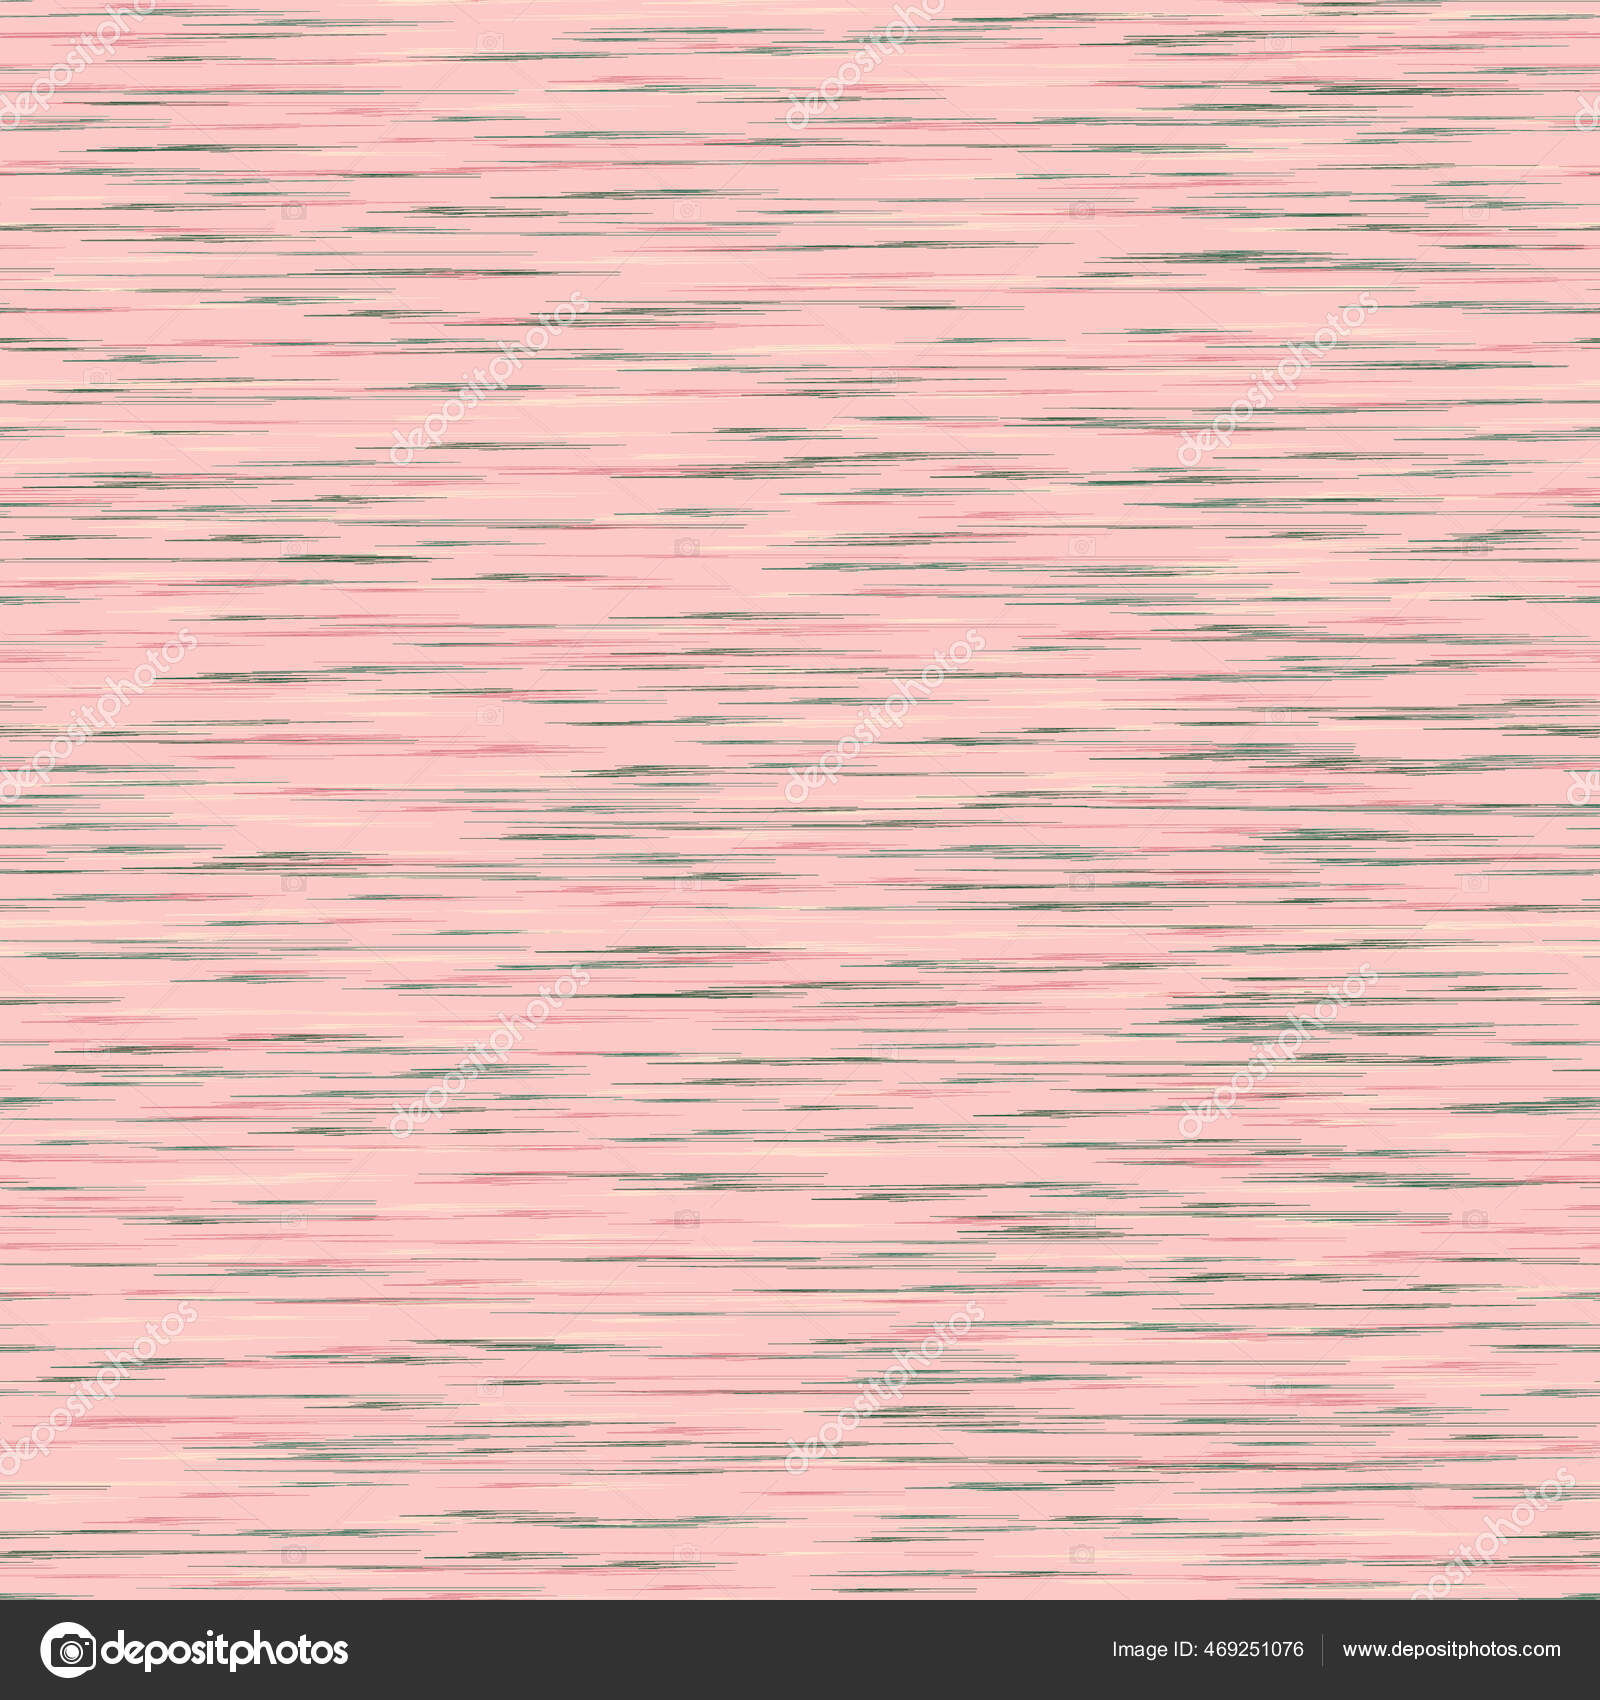 https://st2.depositphotos.com/36232374/46925/v/1600/depositphotos_469251076-stock-illustration-heather-pink-marl-triblend-textile.jpg